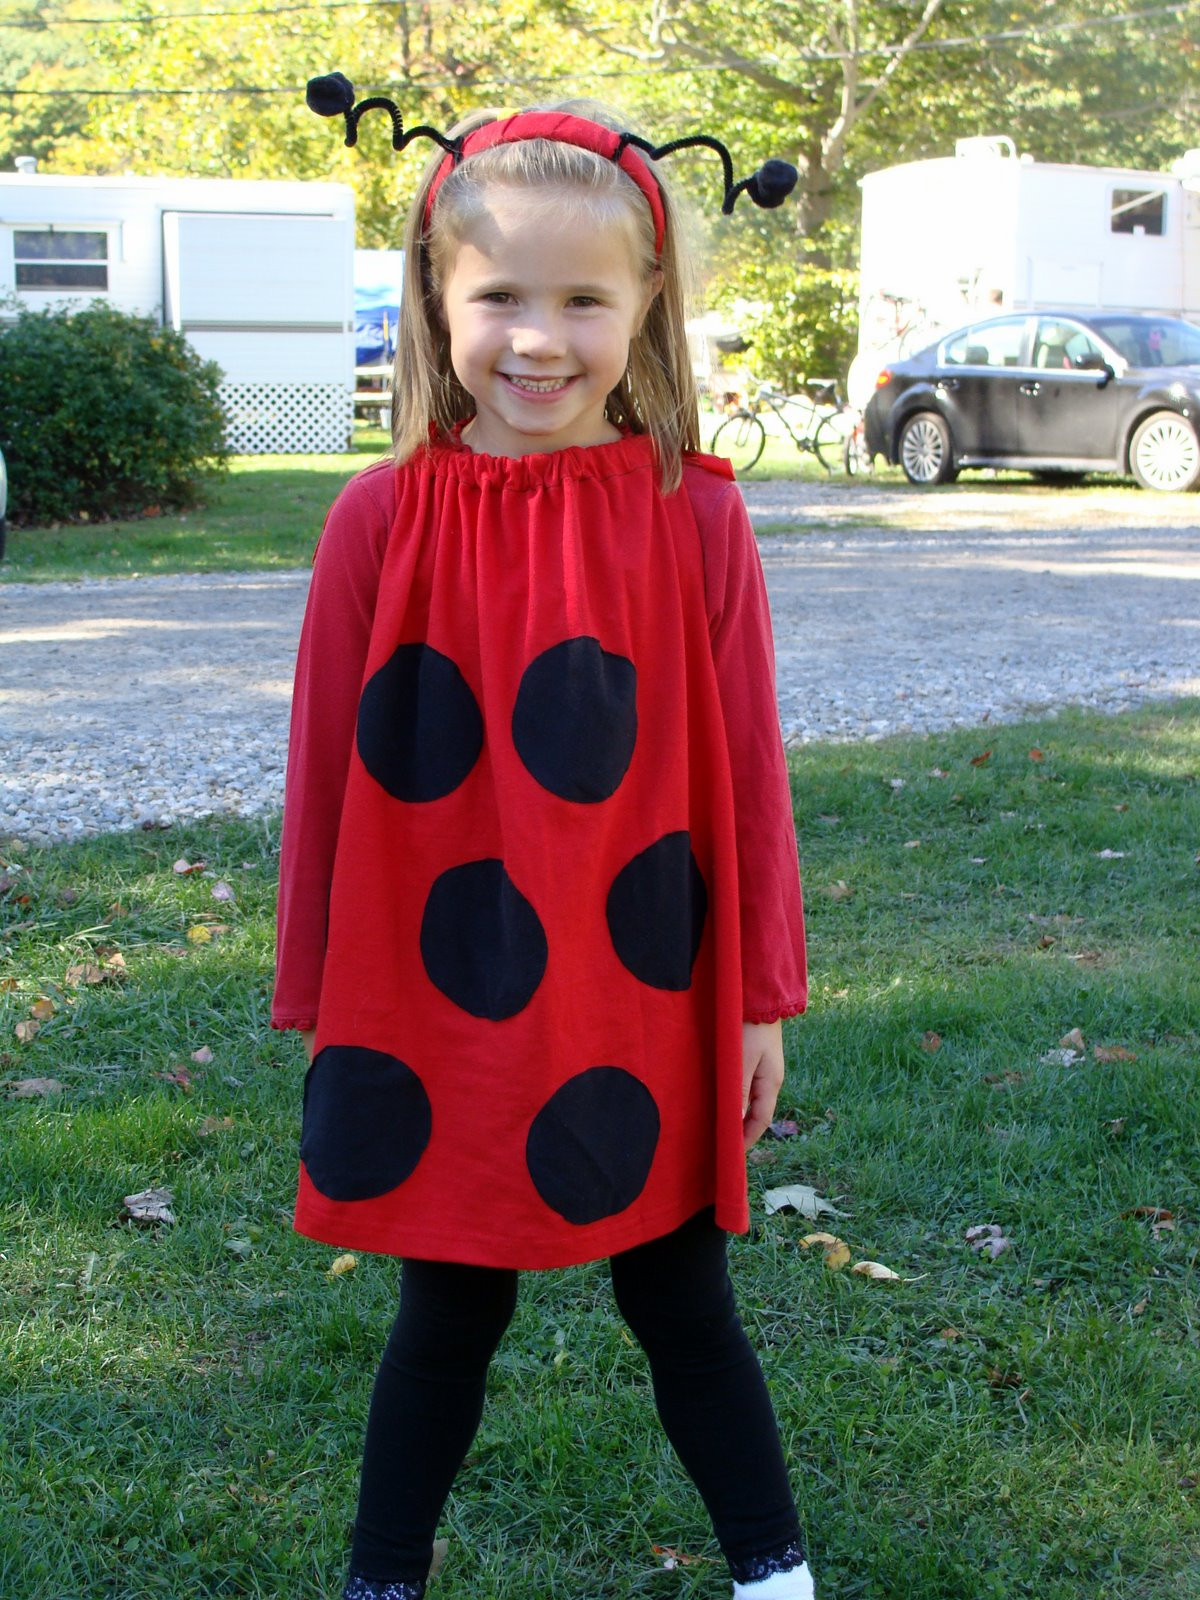 DIY Ladybug Costumes
 7 All To her Super Easy LadyBug Costume